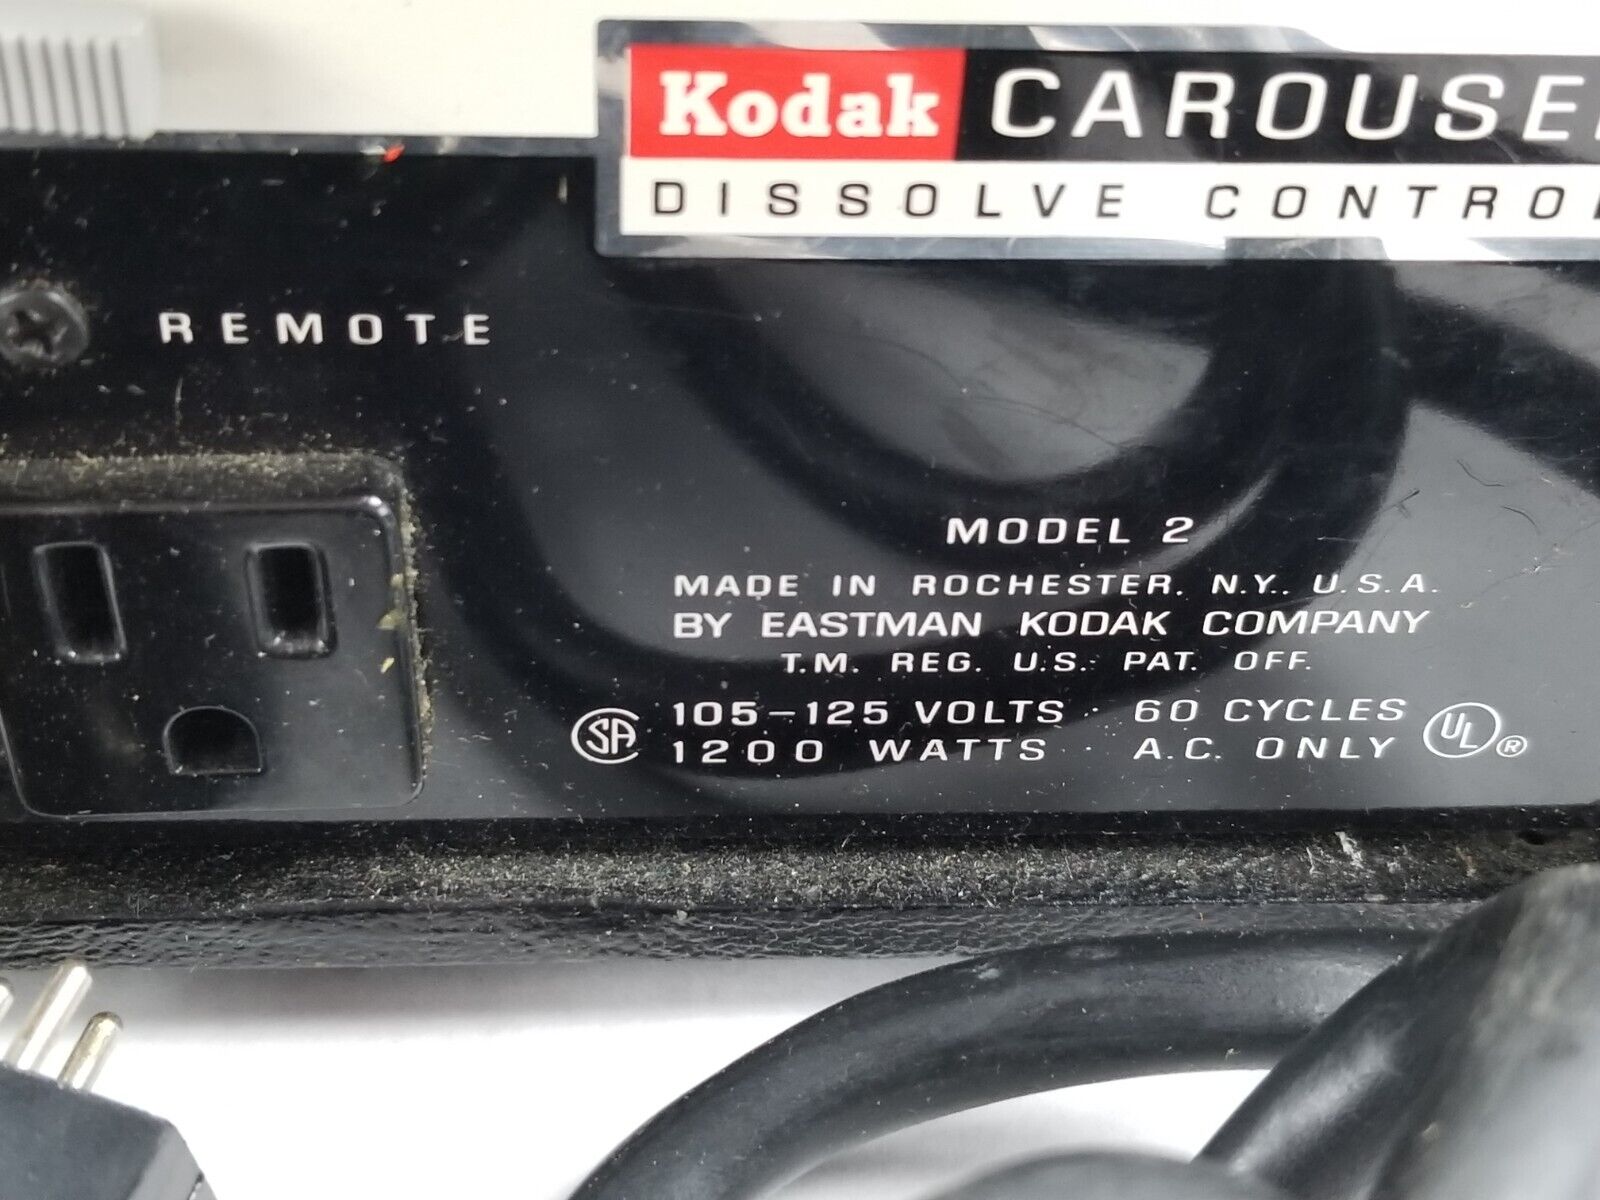 Kodak Carousel Dissolve Control Model 2 Untested.